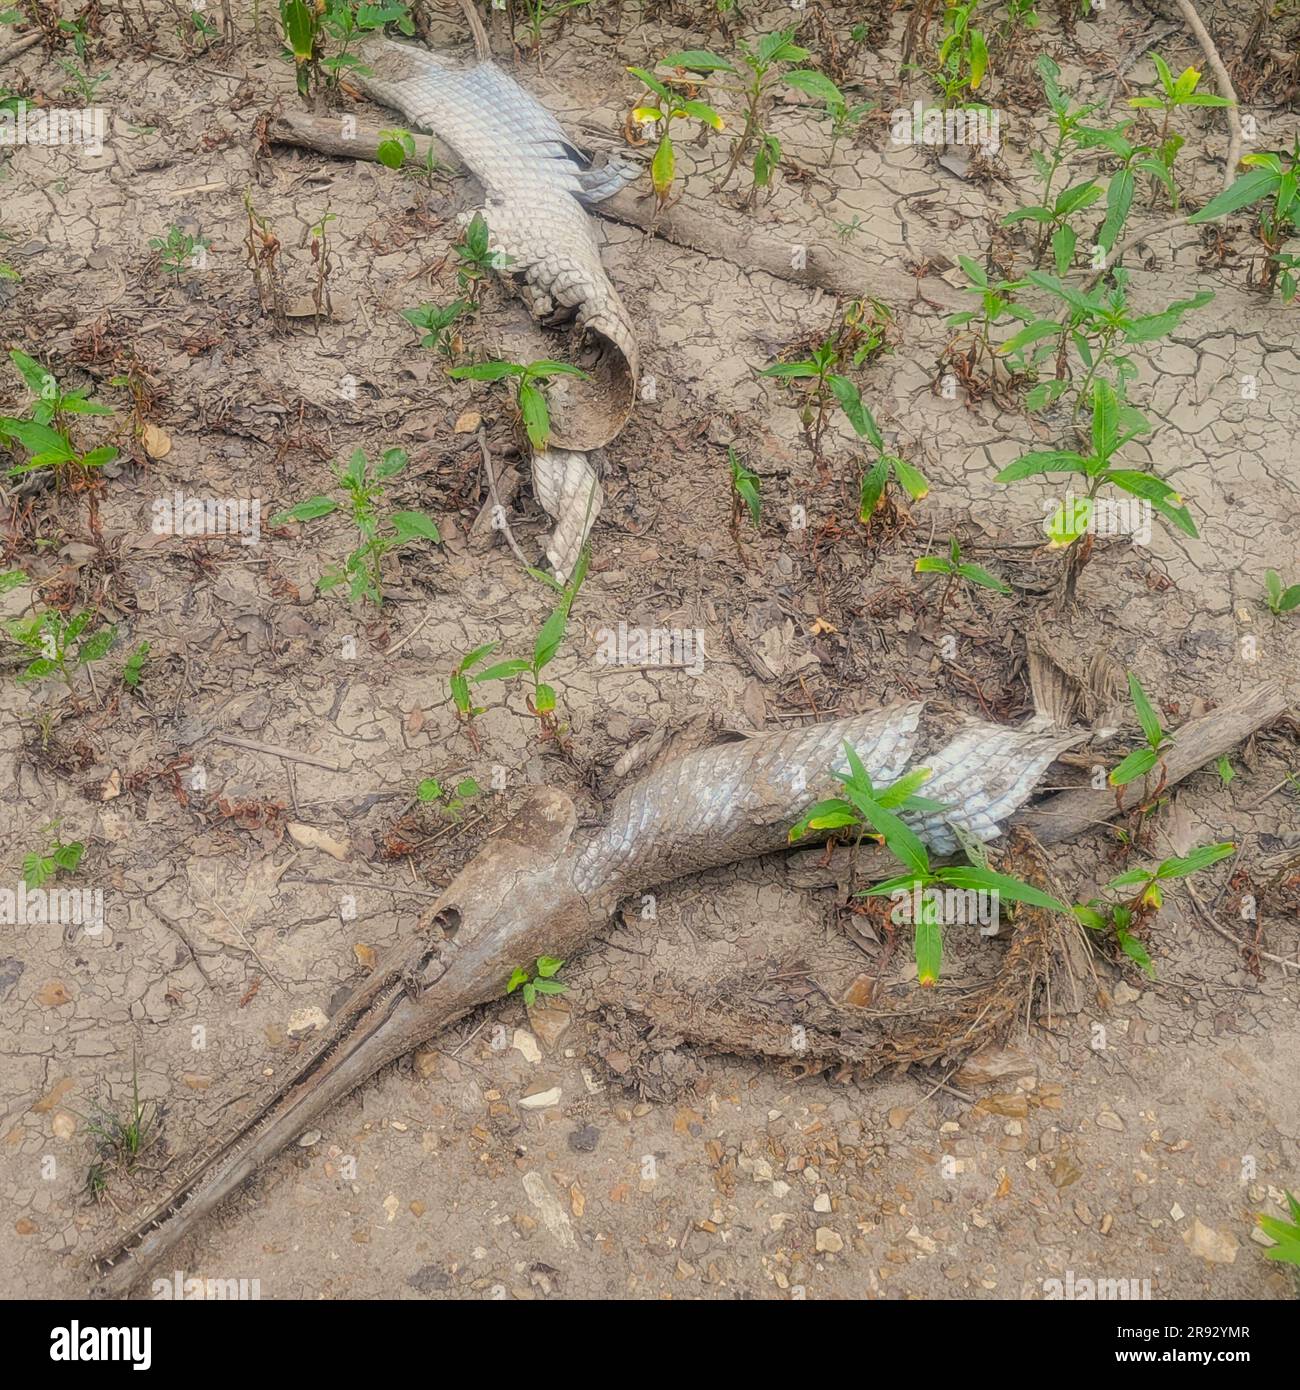 Dead Longnose Gar (Lepisosteus osseus), on the riverbank. Stock Photo